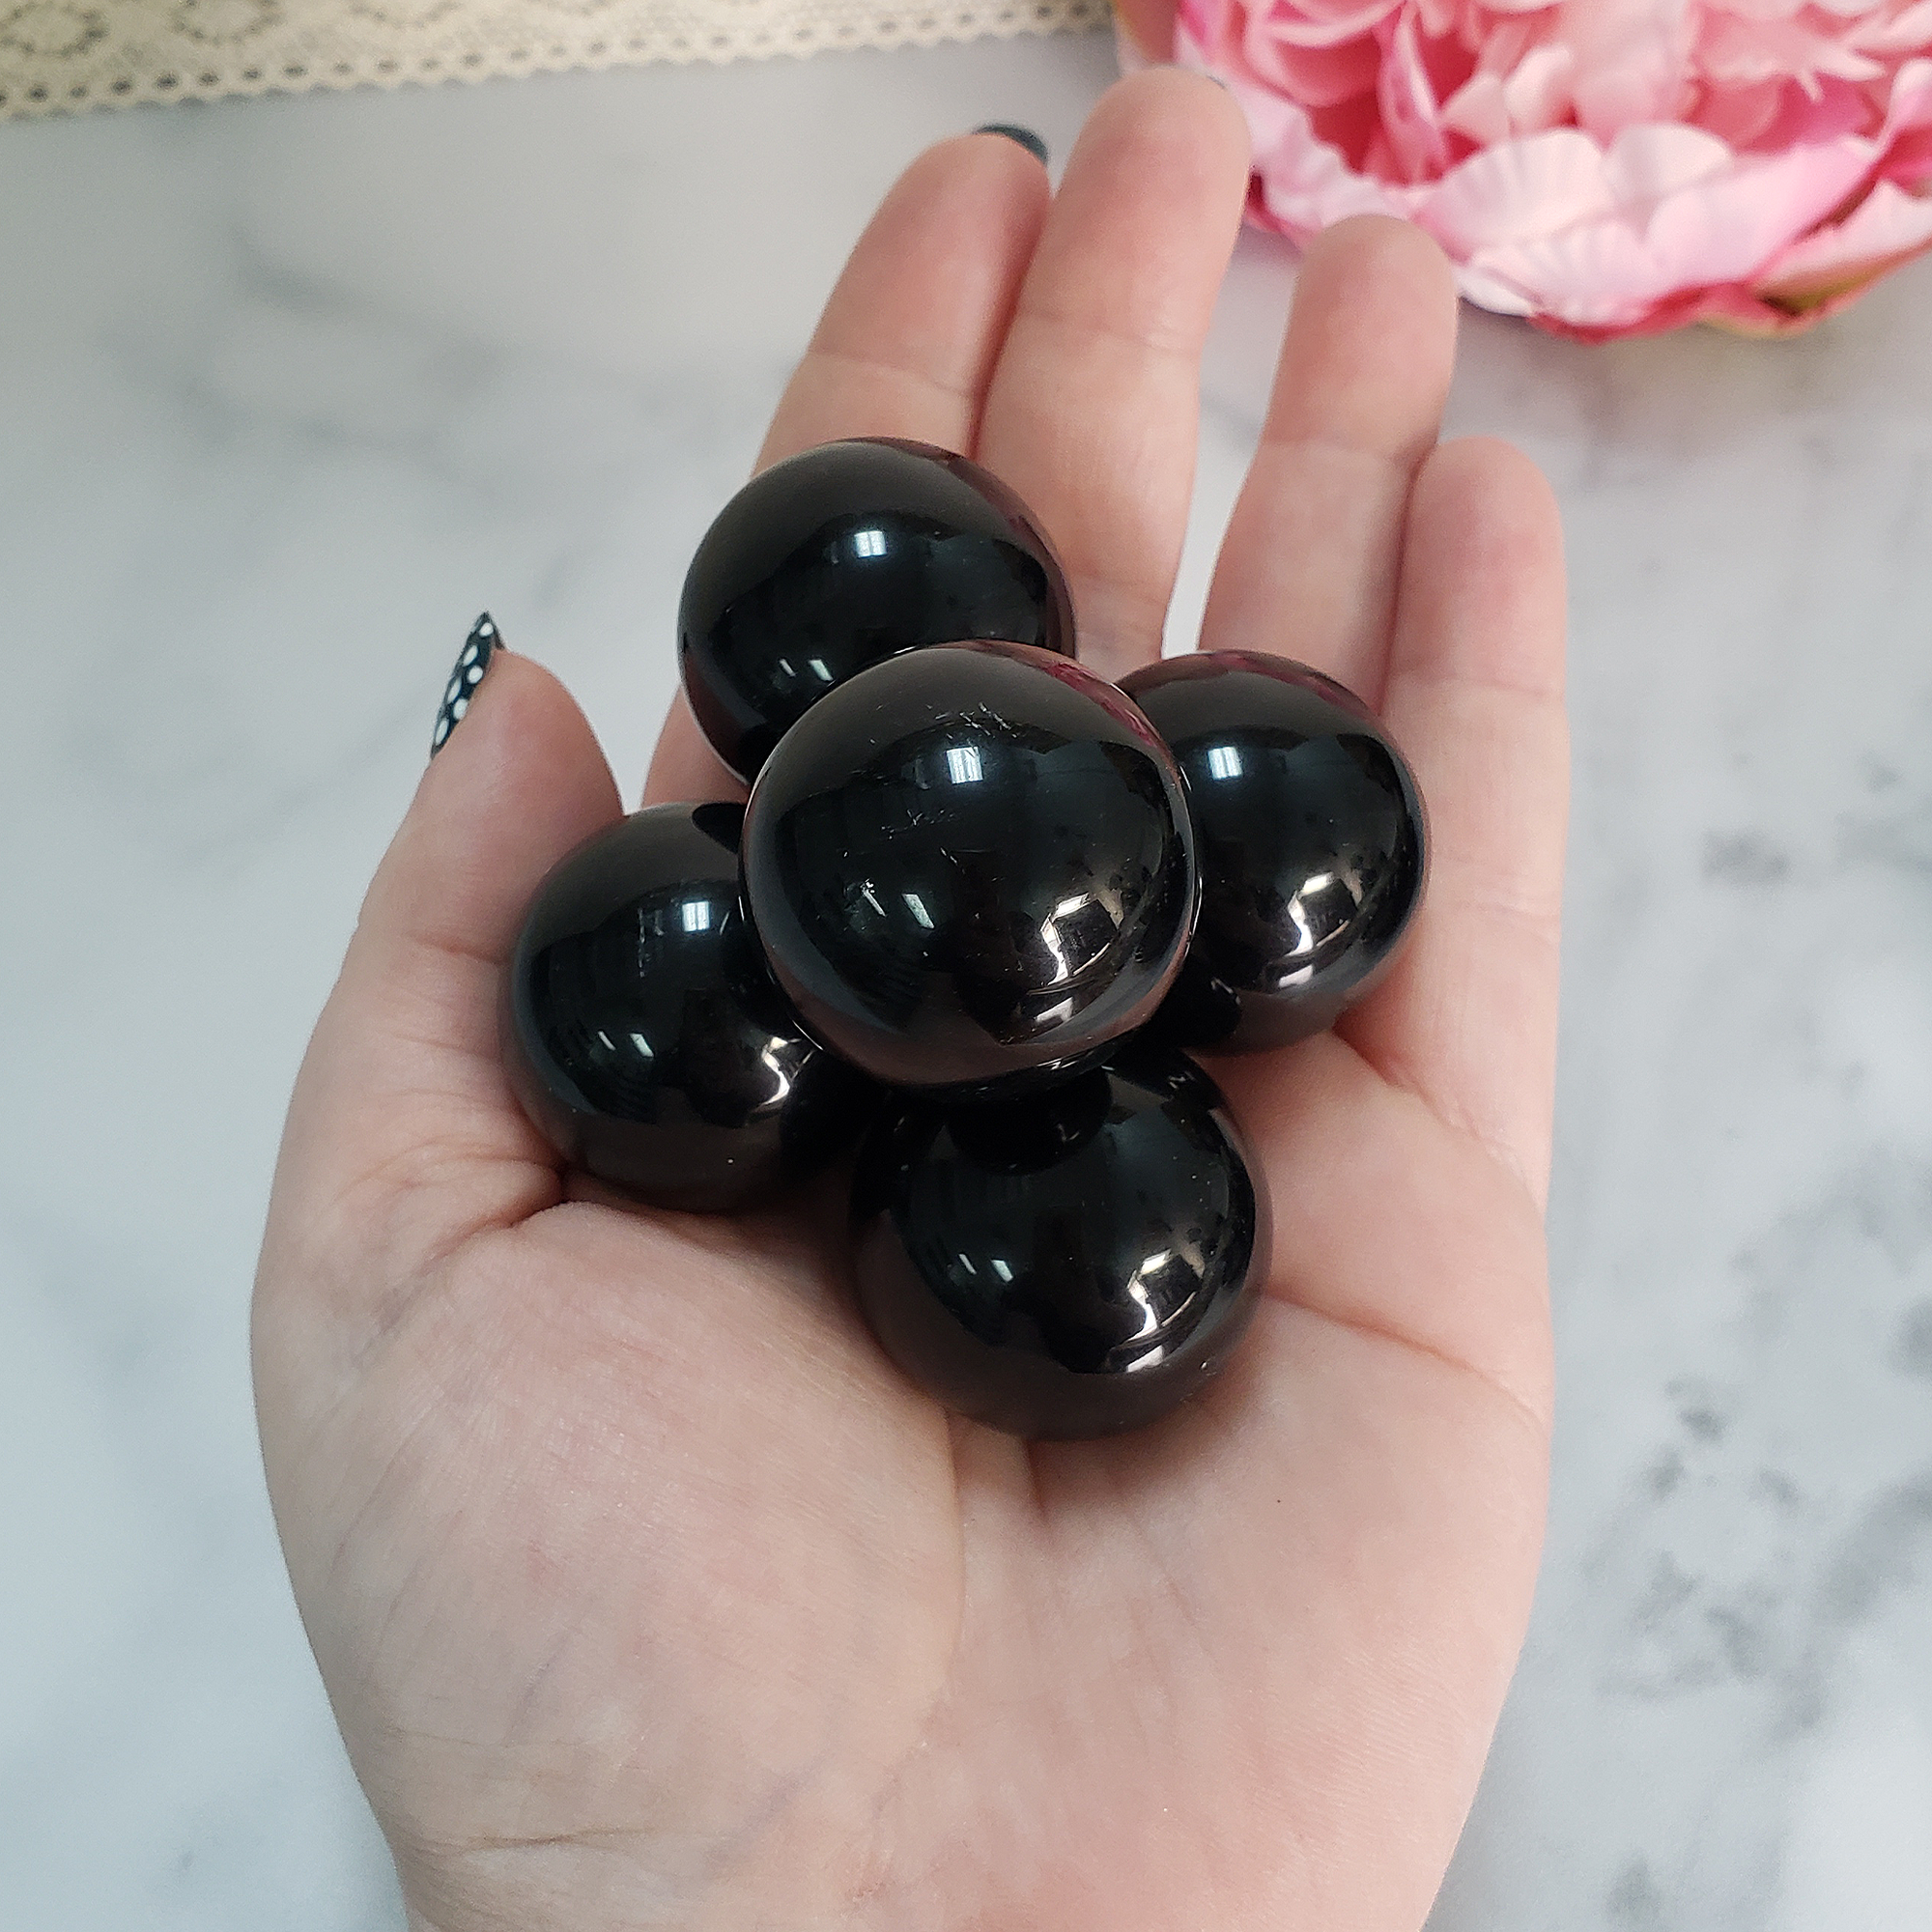 Black Obsidian Natural Crystal Sphere Gemstone Orb Marble - One 30mm Sphere - Group of Black Obsidian Crystal Orbs on Palm